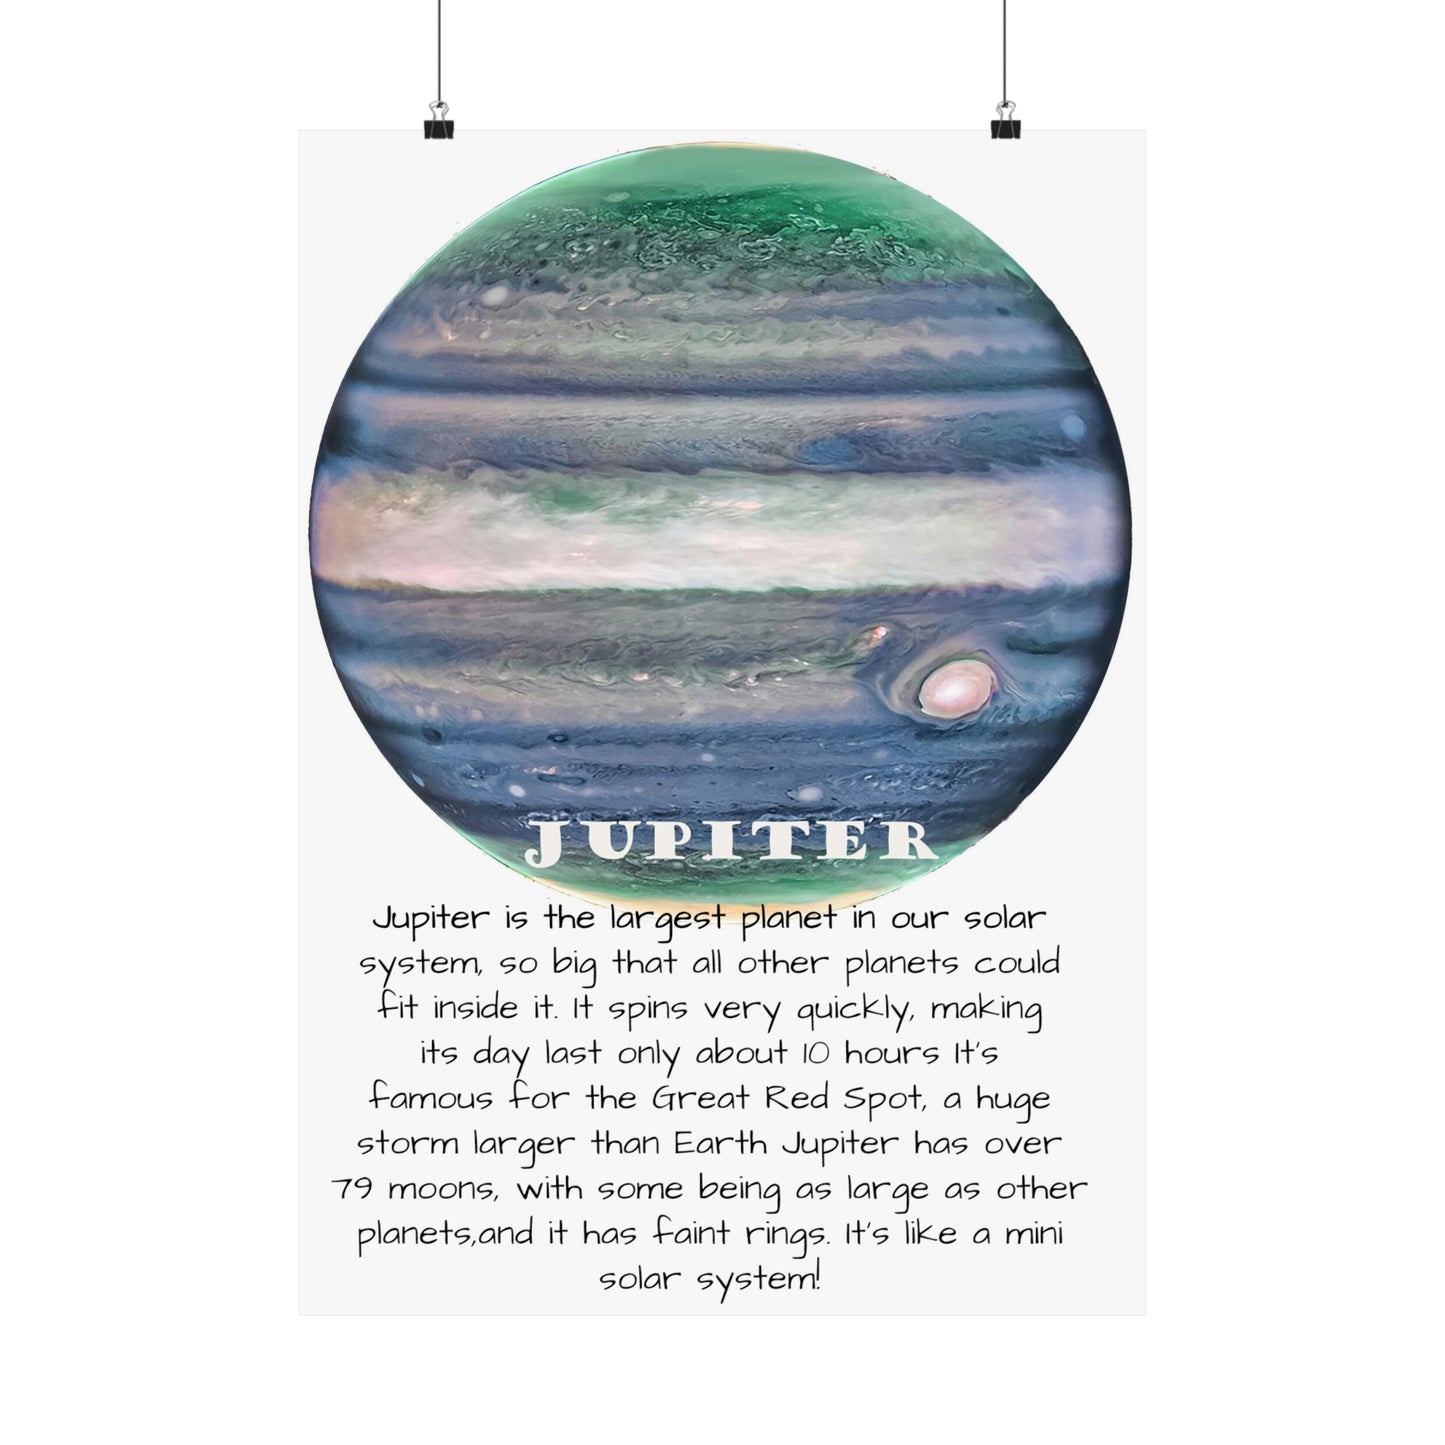 Jupiter's Majesty: Premium Cosmos Series Poster